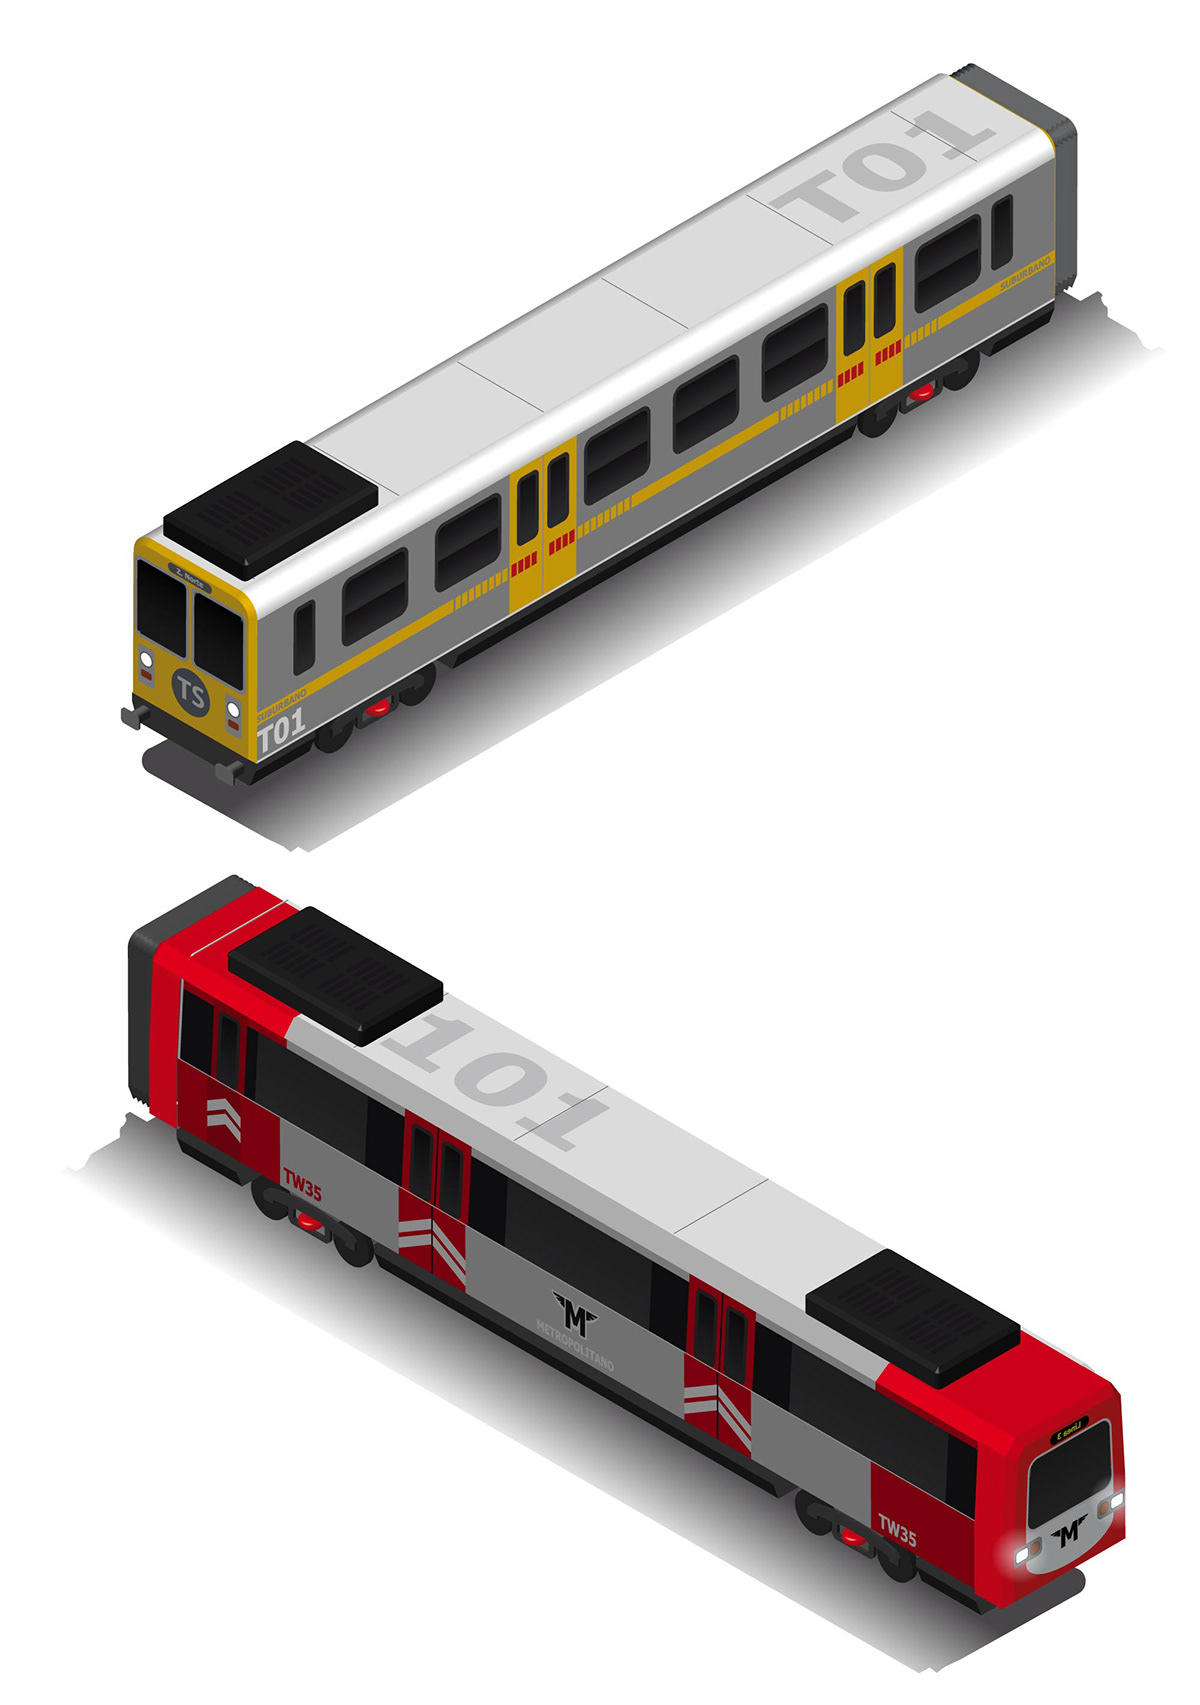 Axonómetrica ilustraciones infografia infographic infraestructura Isometric metro railway trenes vectors